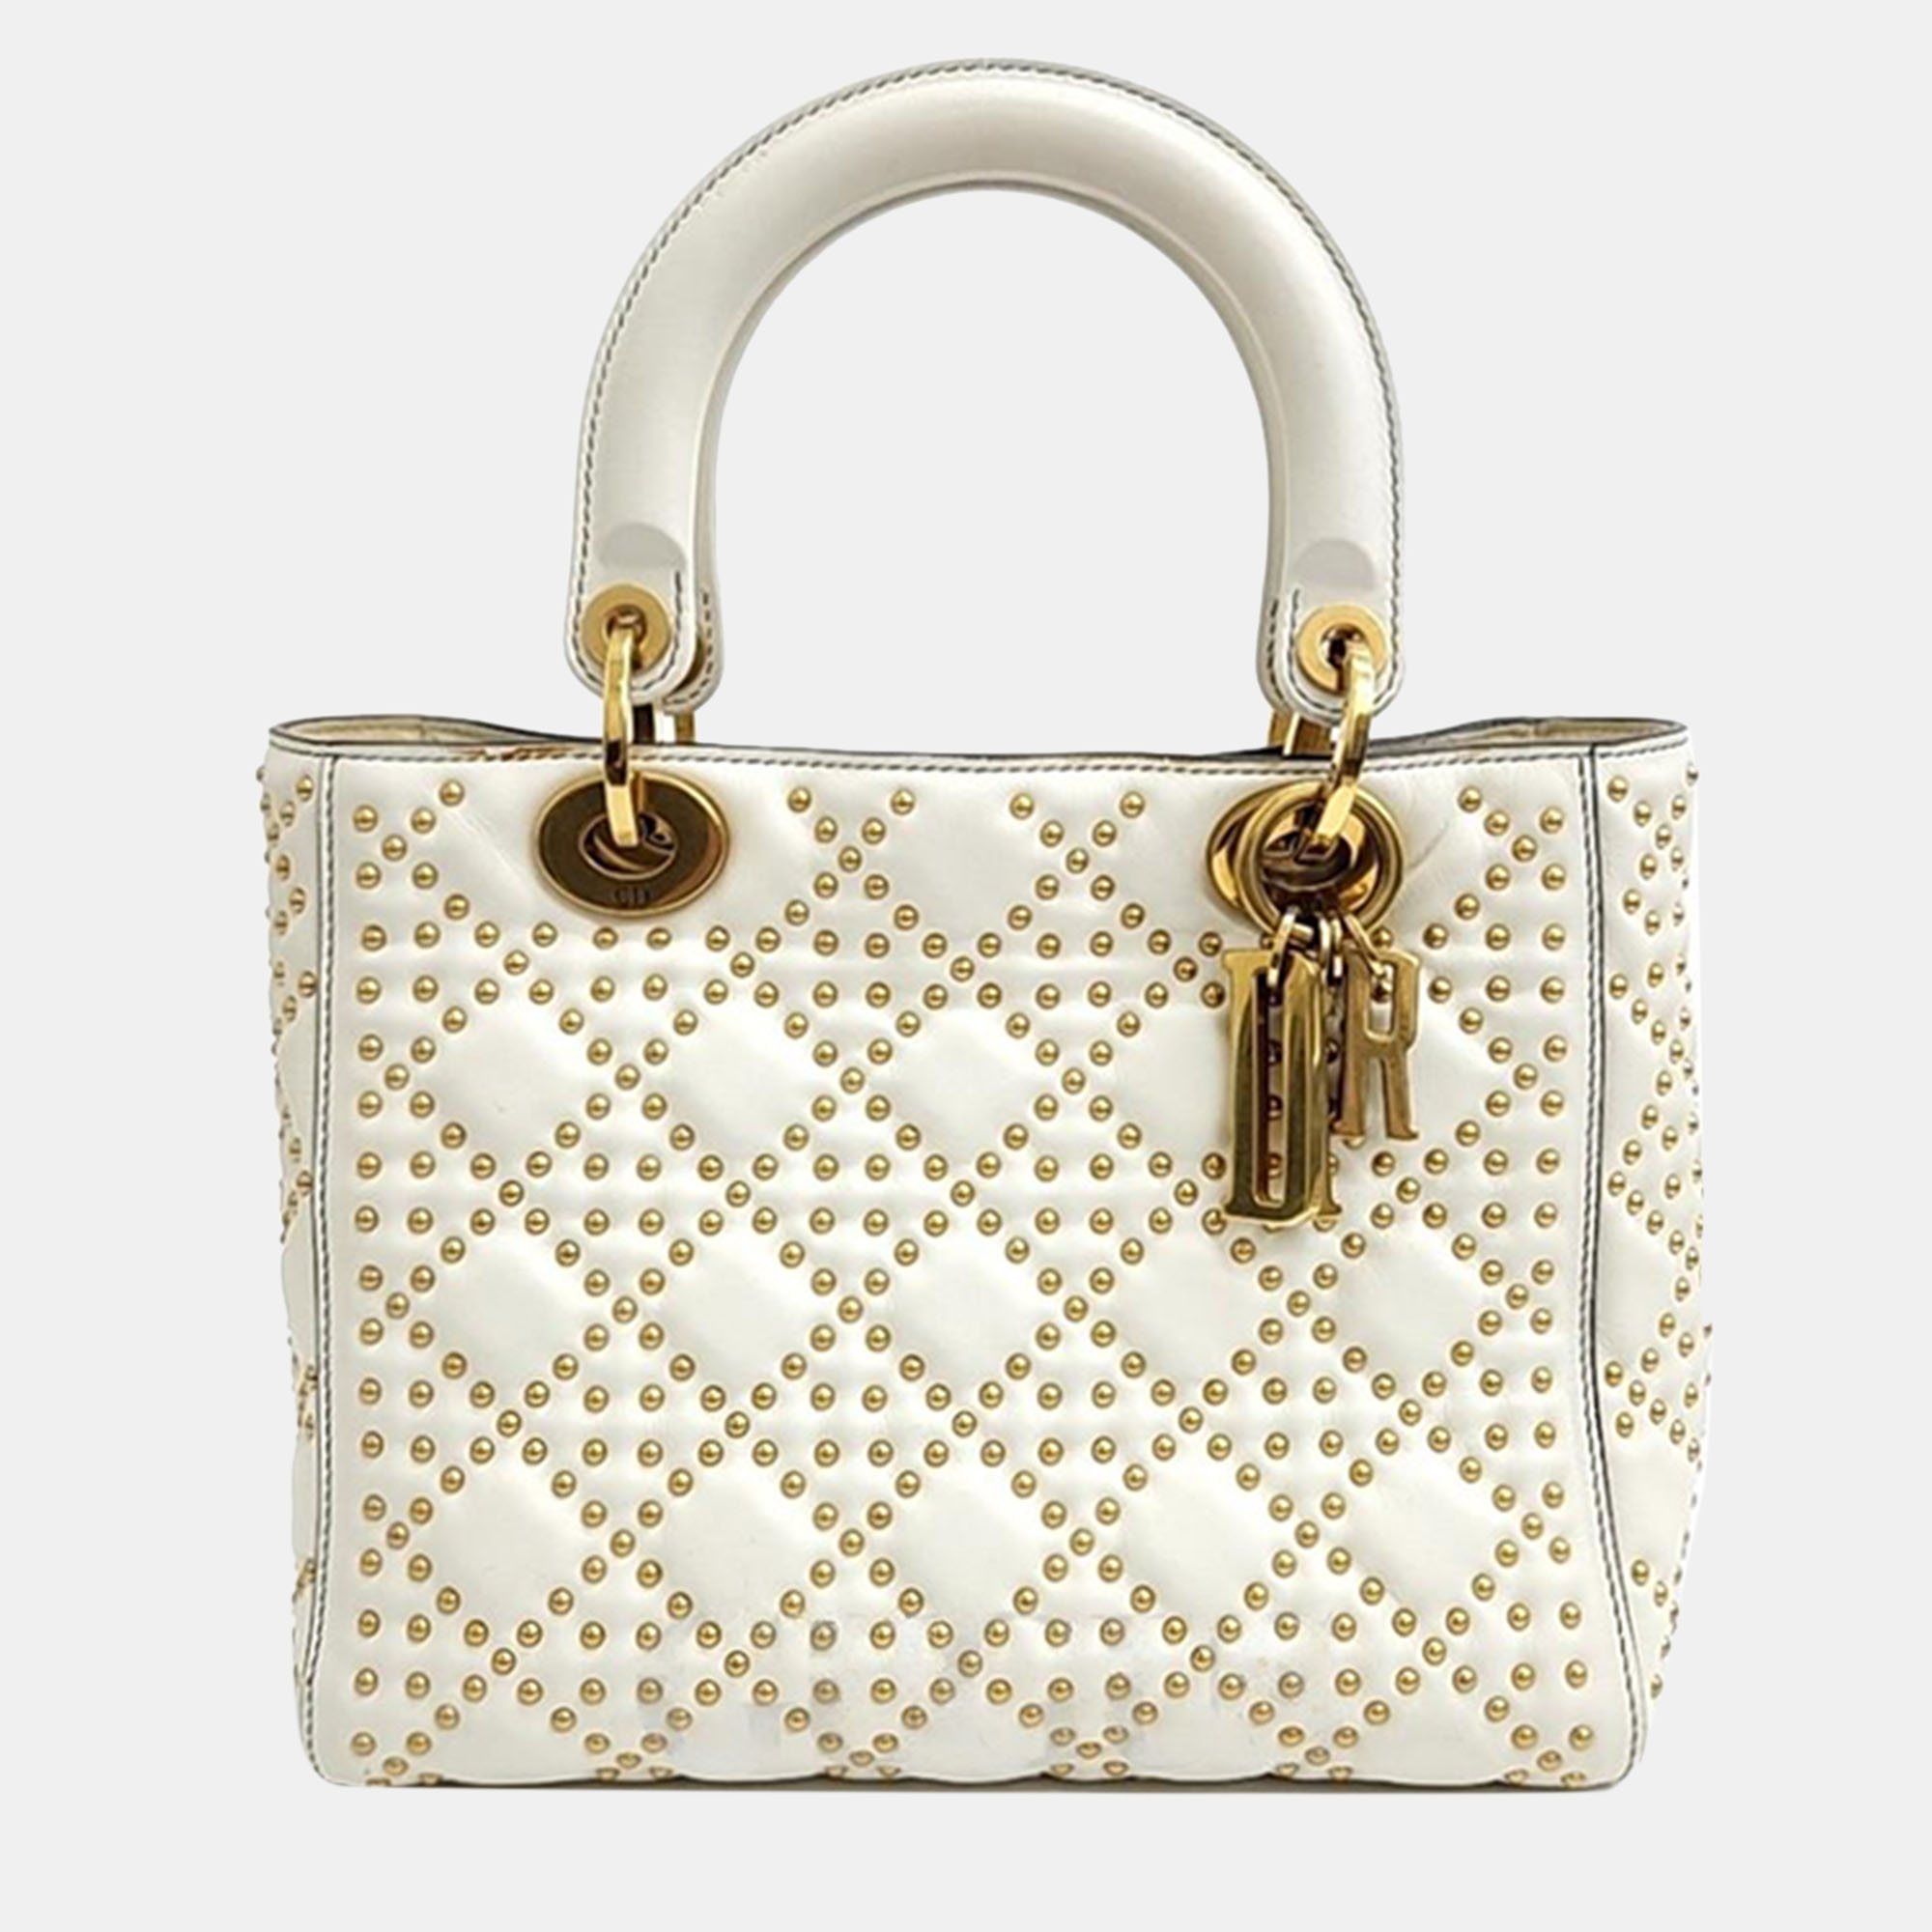 Christian Dior Studded Cannage Lady Bag